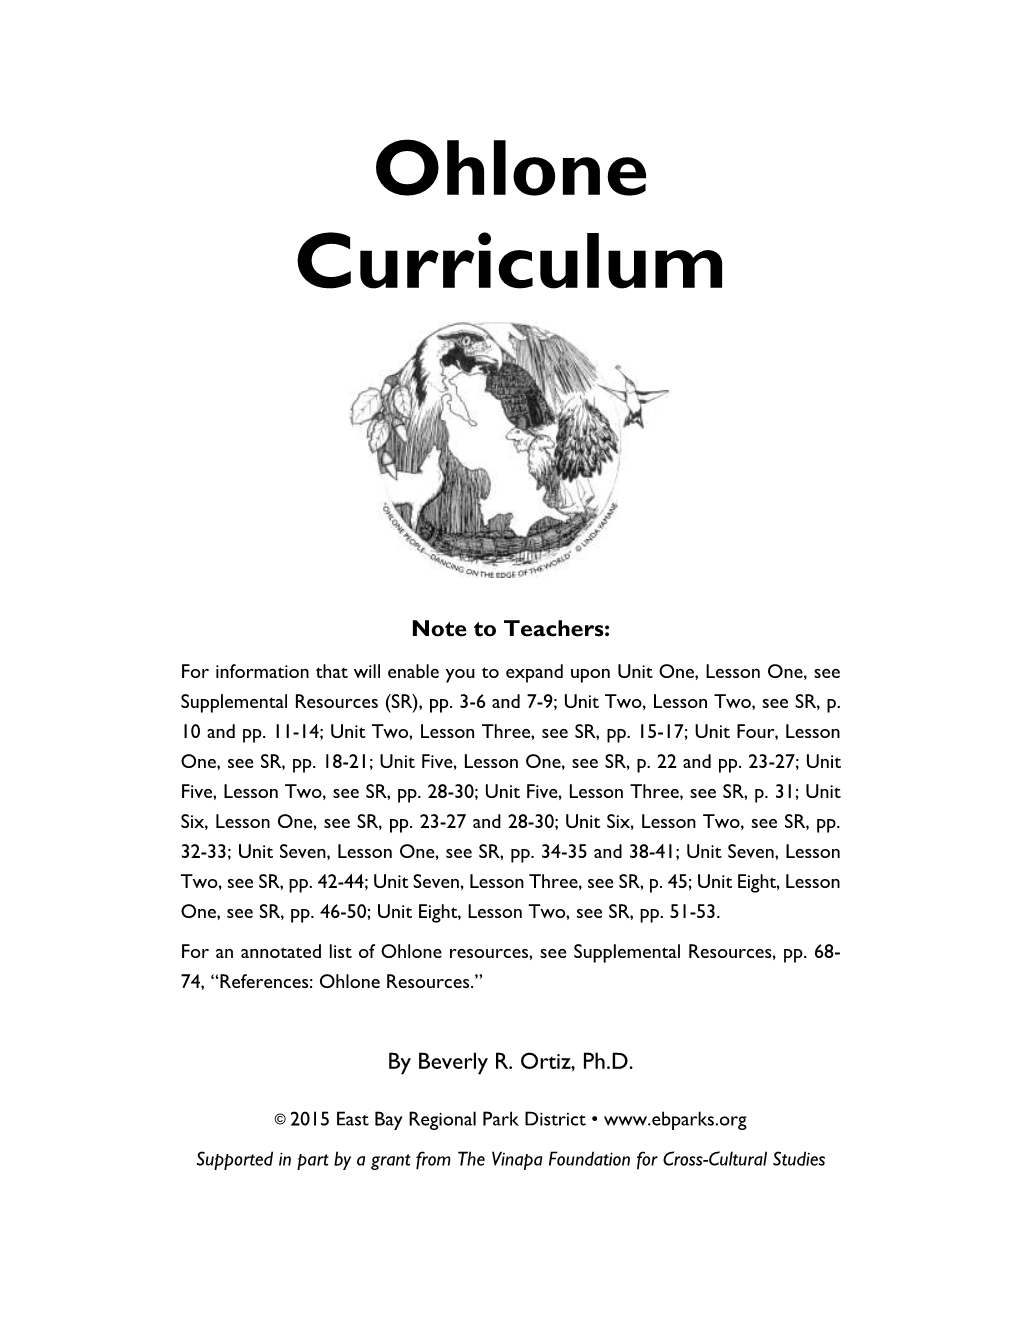 Student Resources – Ohlone Curriculum